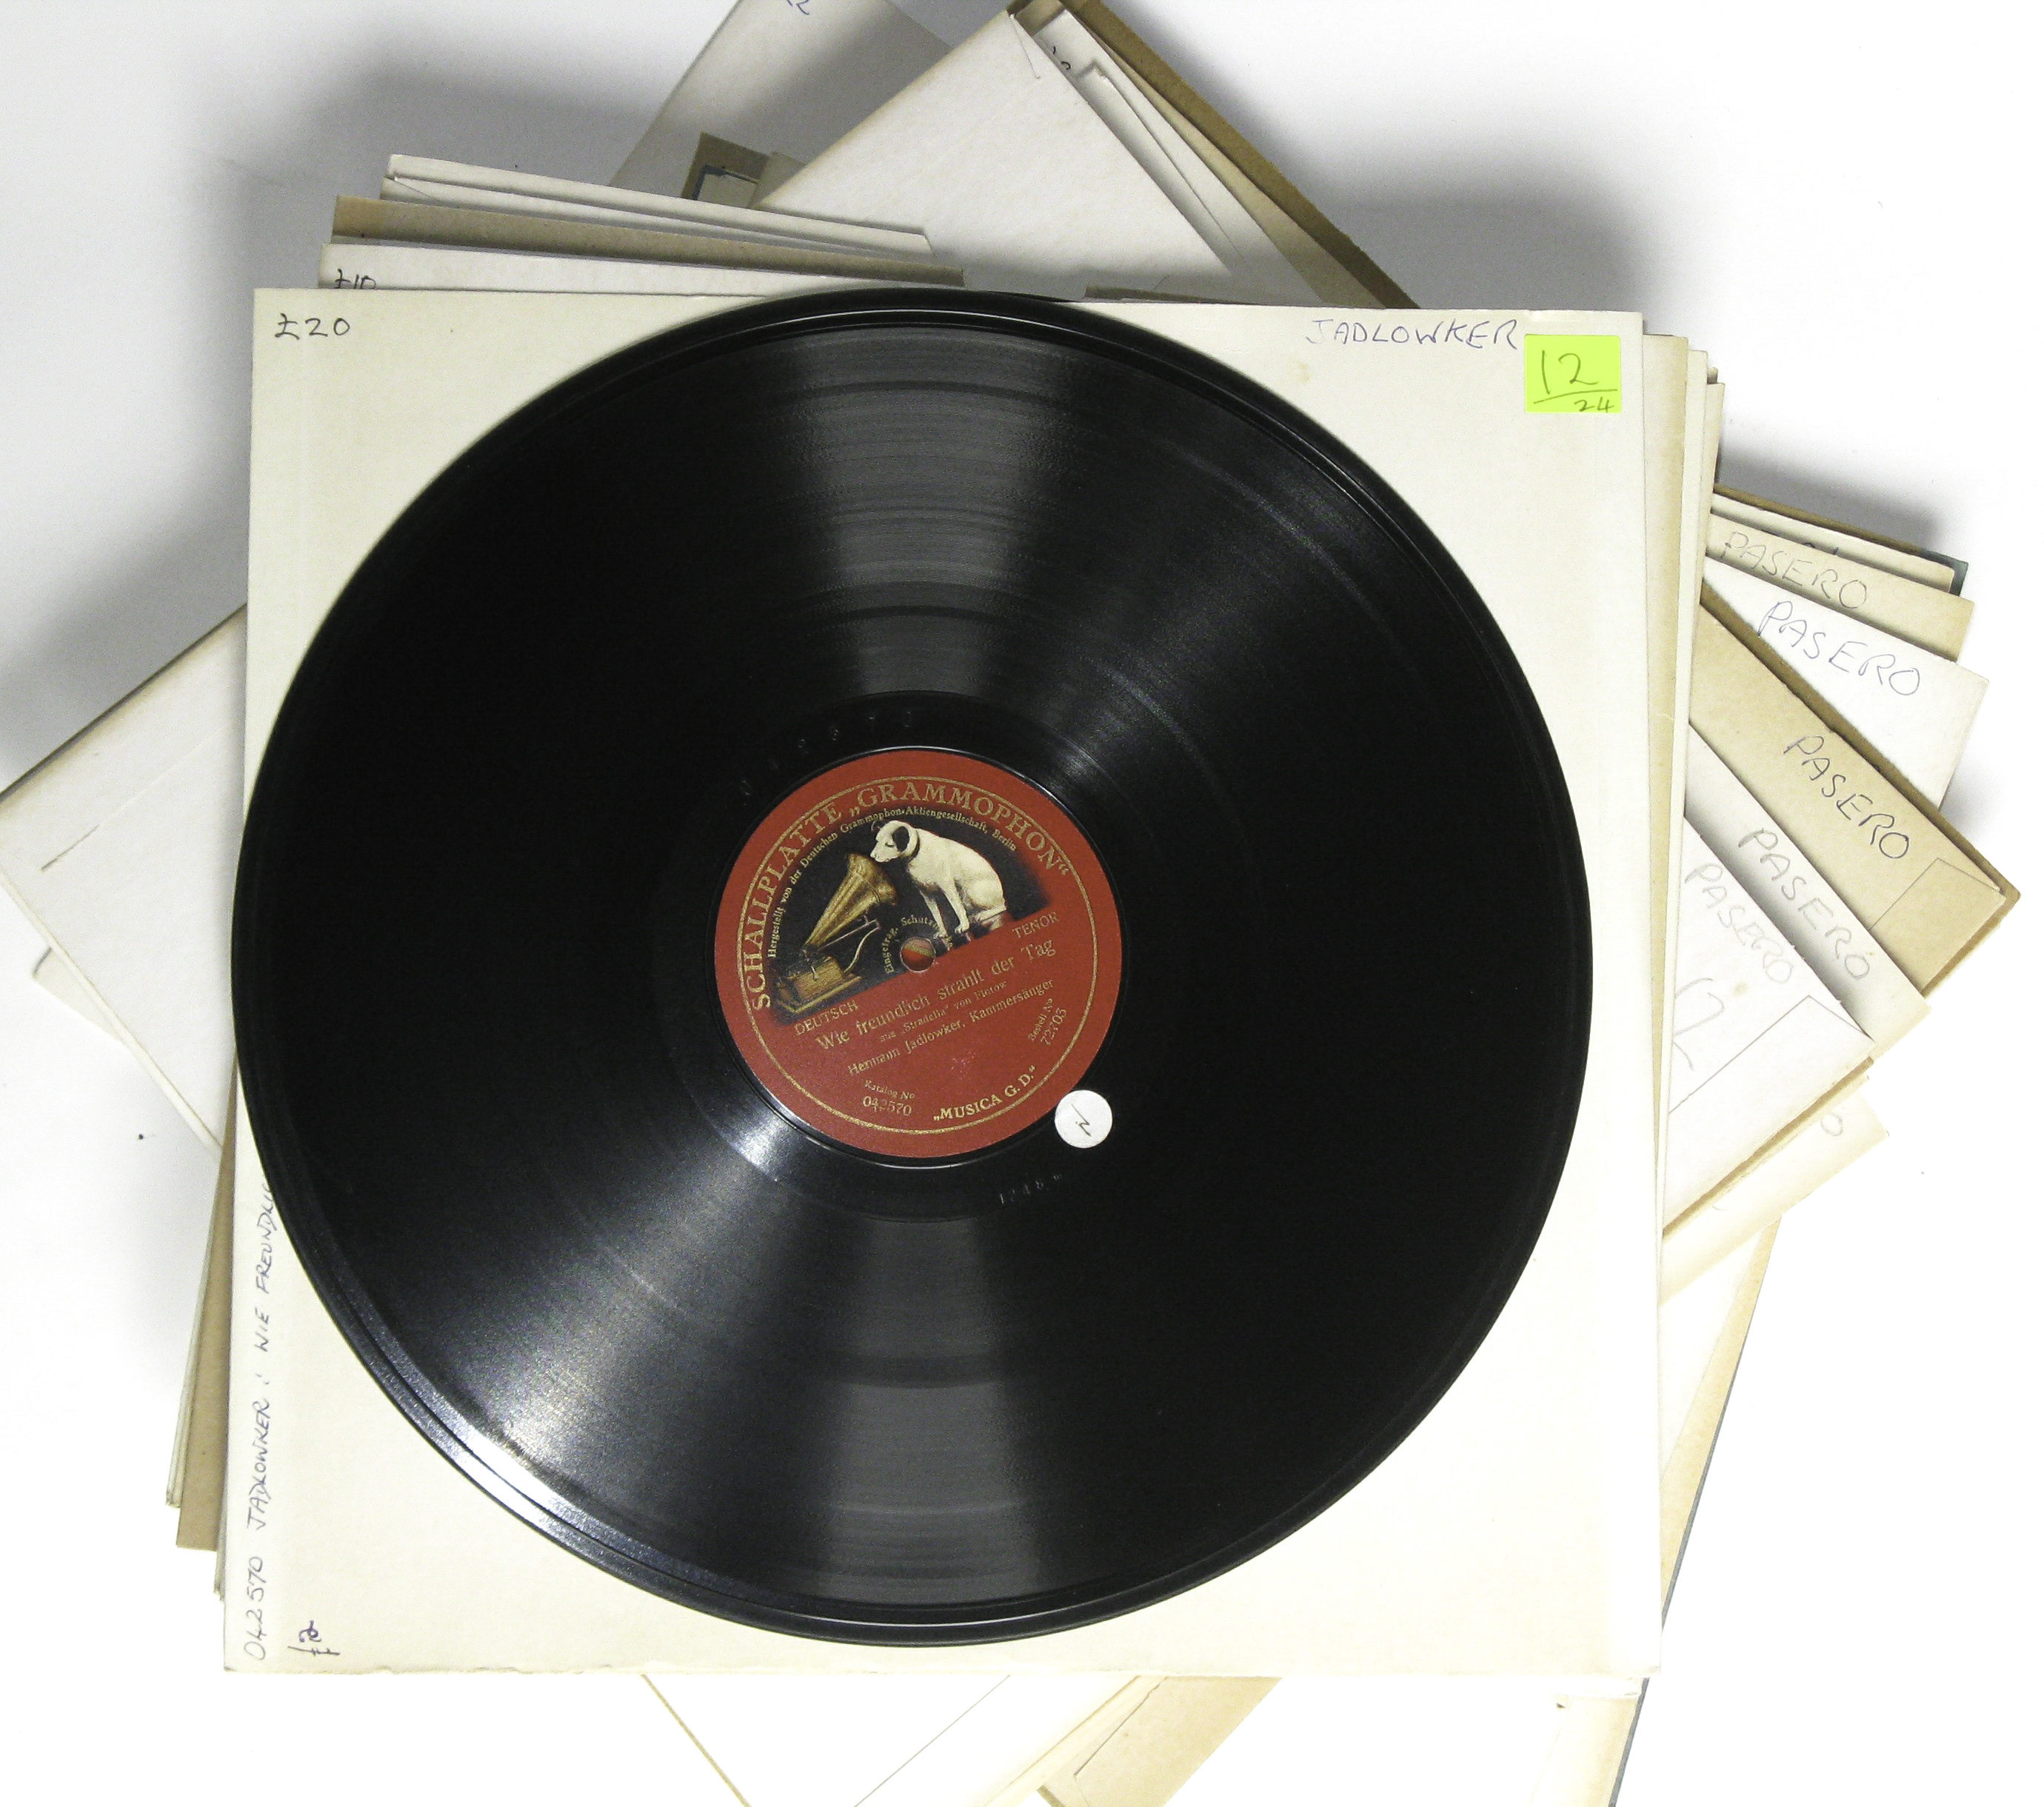 Vocal records, 12-inch: Twenty-four, by Jadlowker  (Schallpl. 042570, HMV DB495); Pasero (Cetra BB